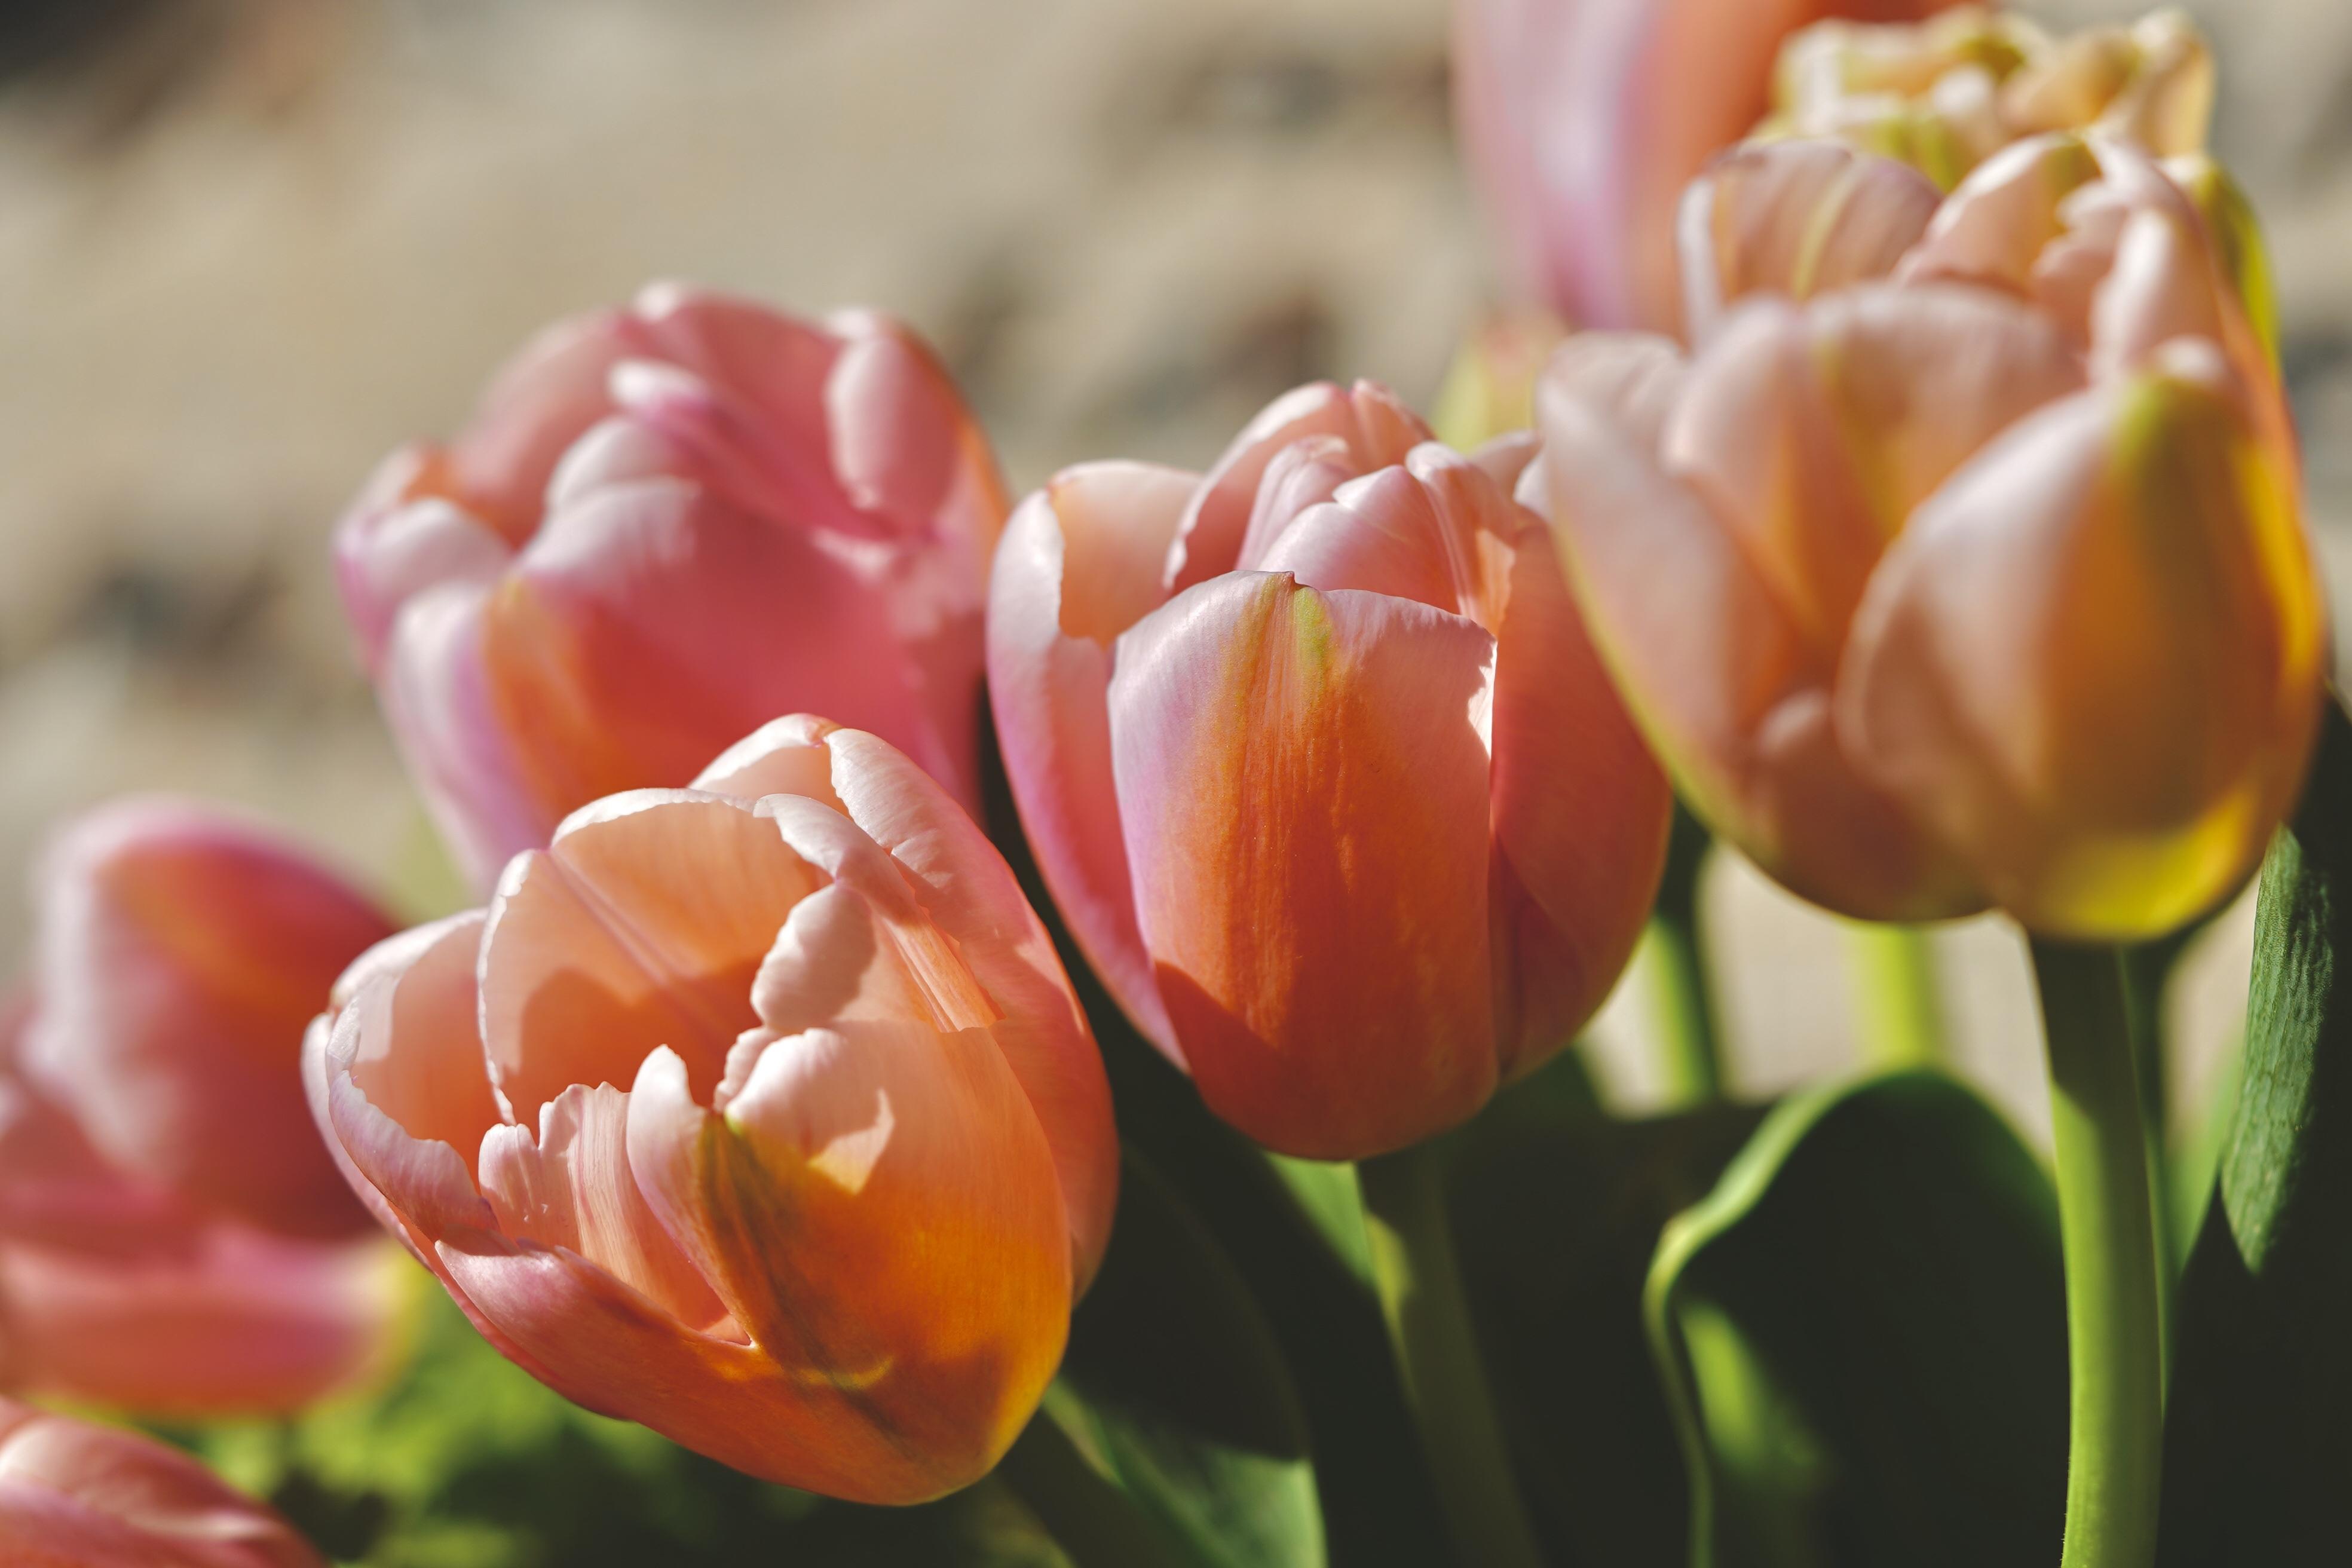 Precooled Tulip Triumph 'Apricot Beauty' - Tulip from Leo Berbee Bulb Company